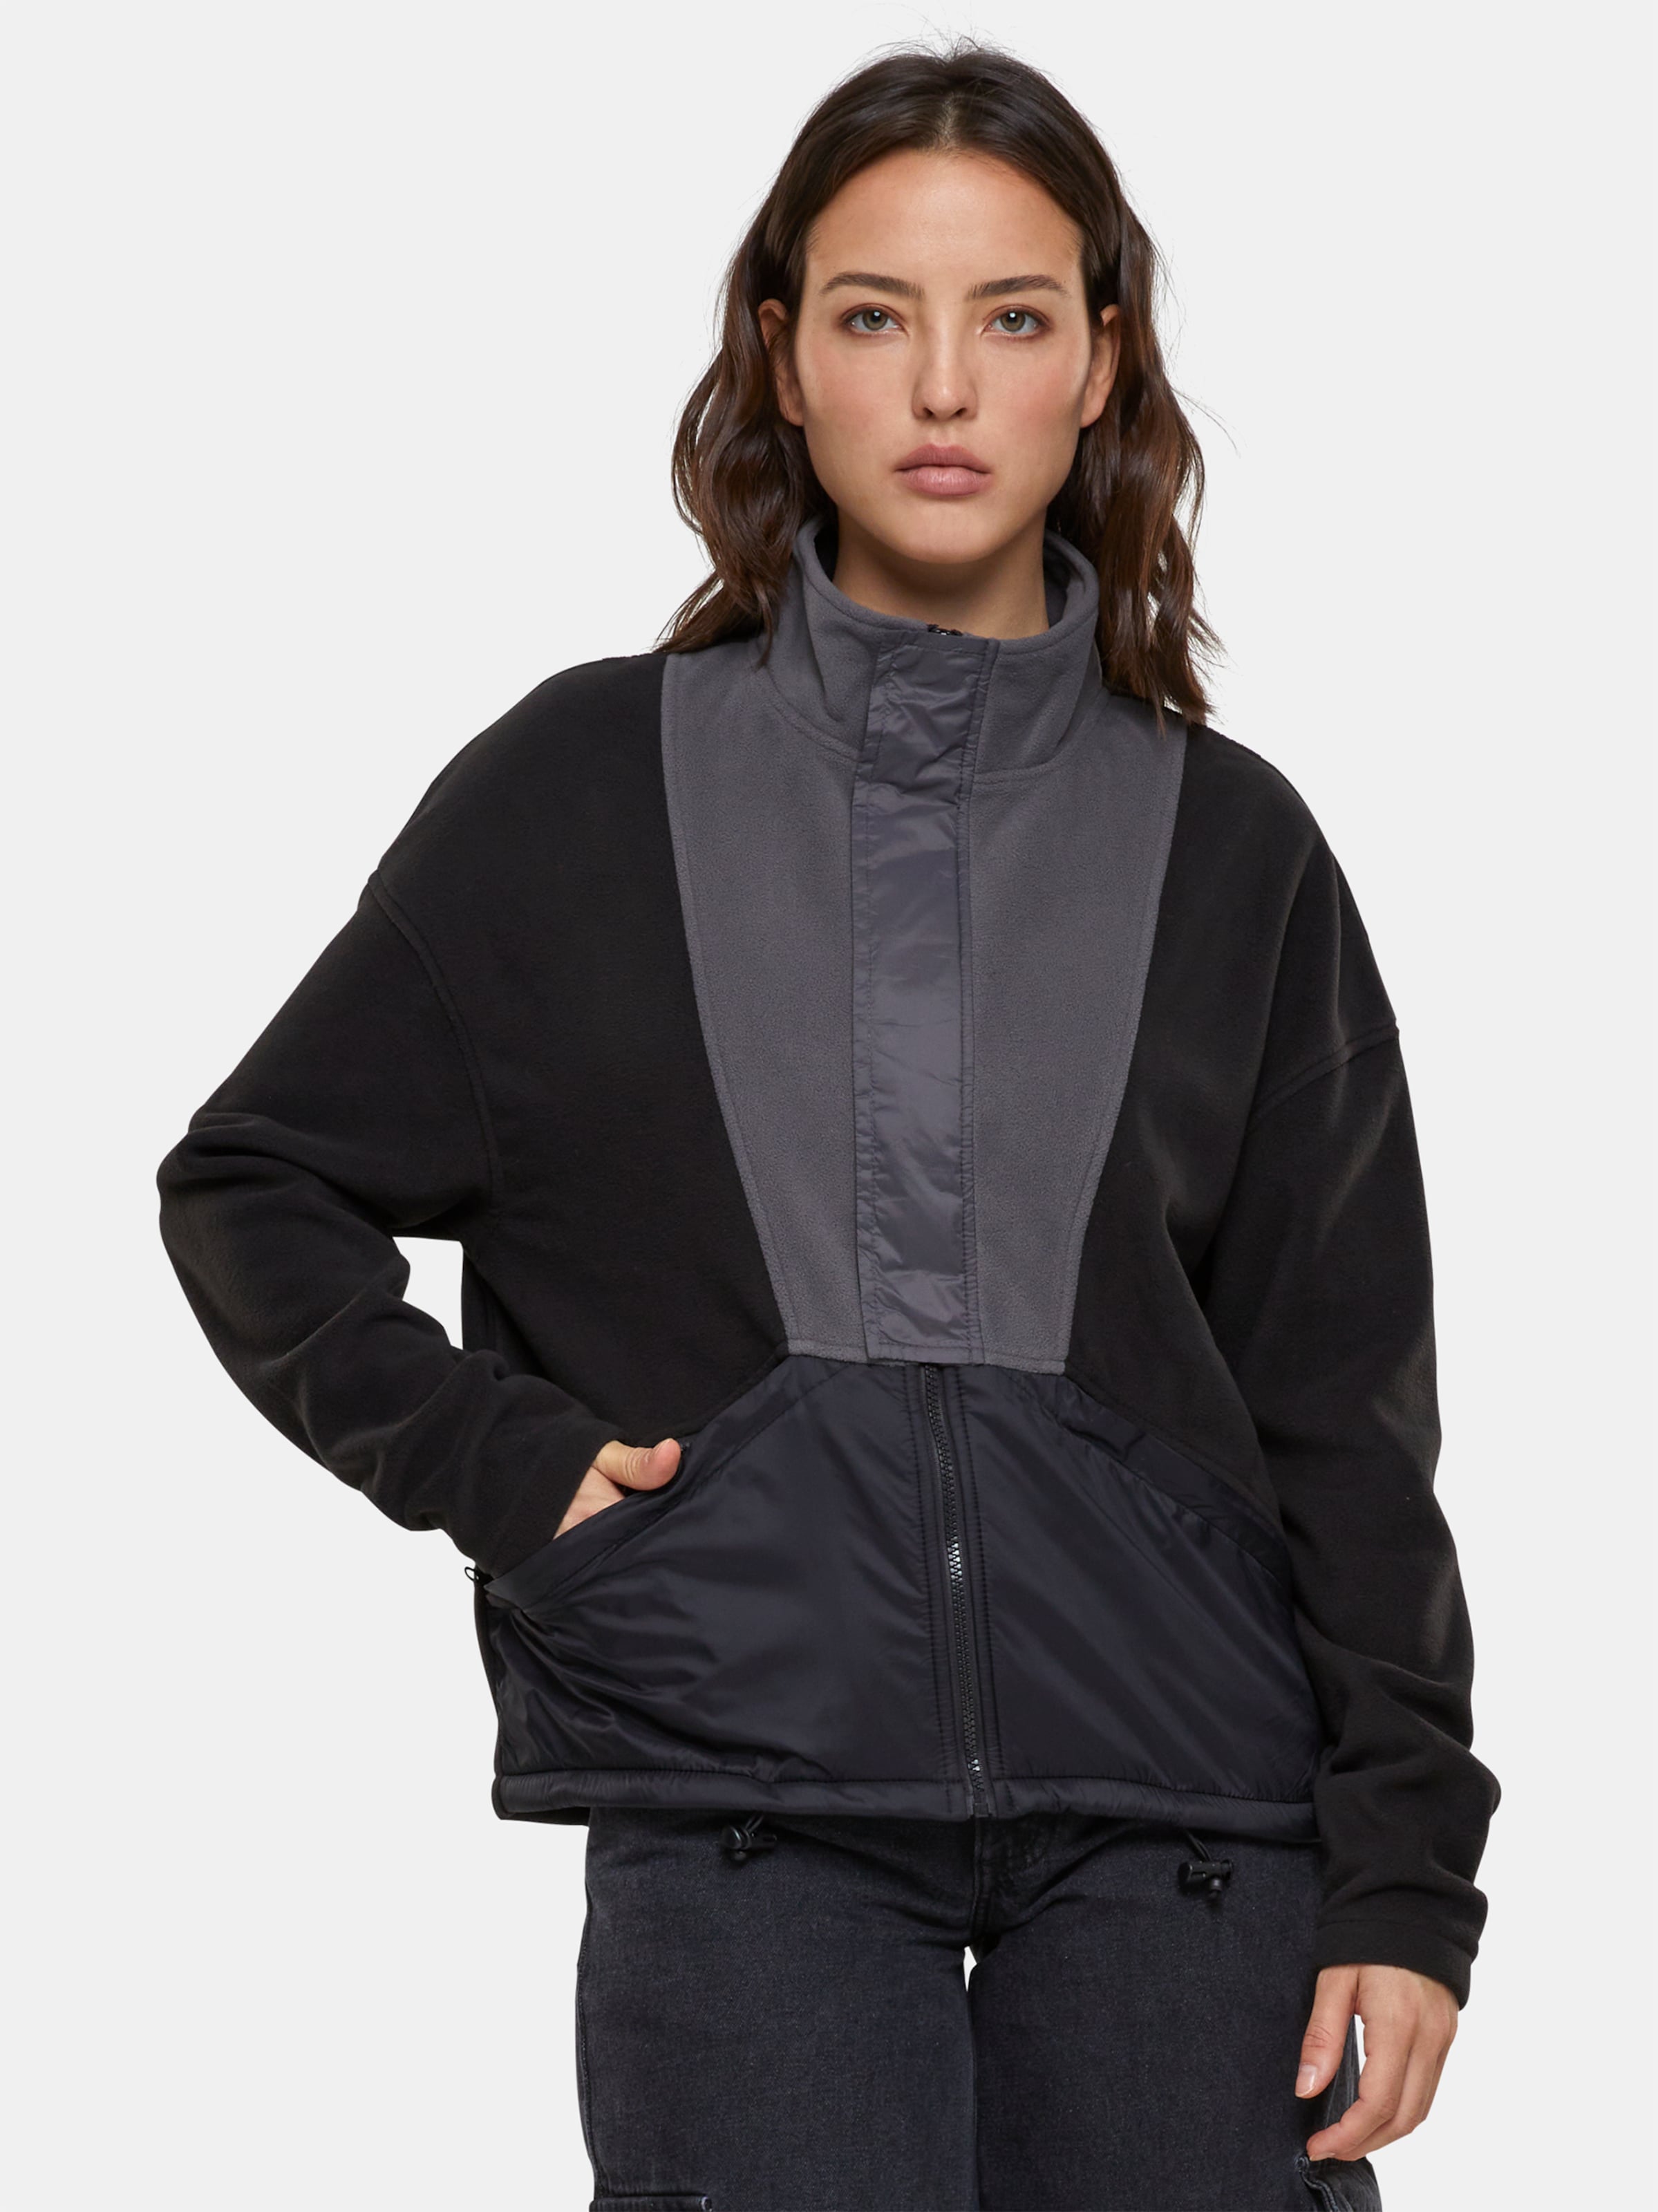 Urban Classics - Polarfleece Trainings jacket - XS - Zwart/Grijs